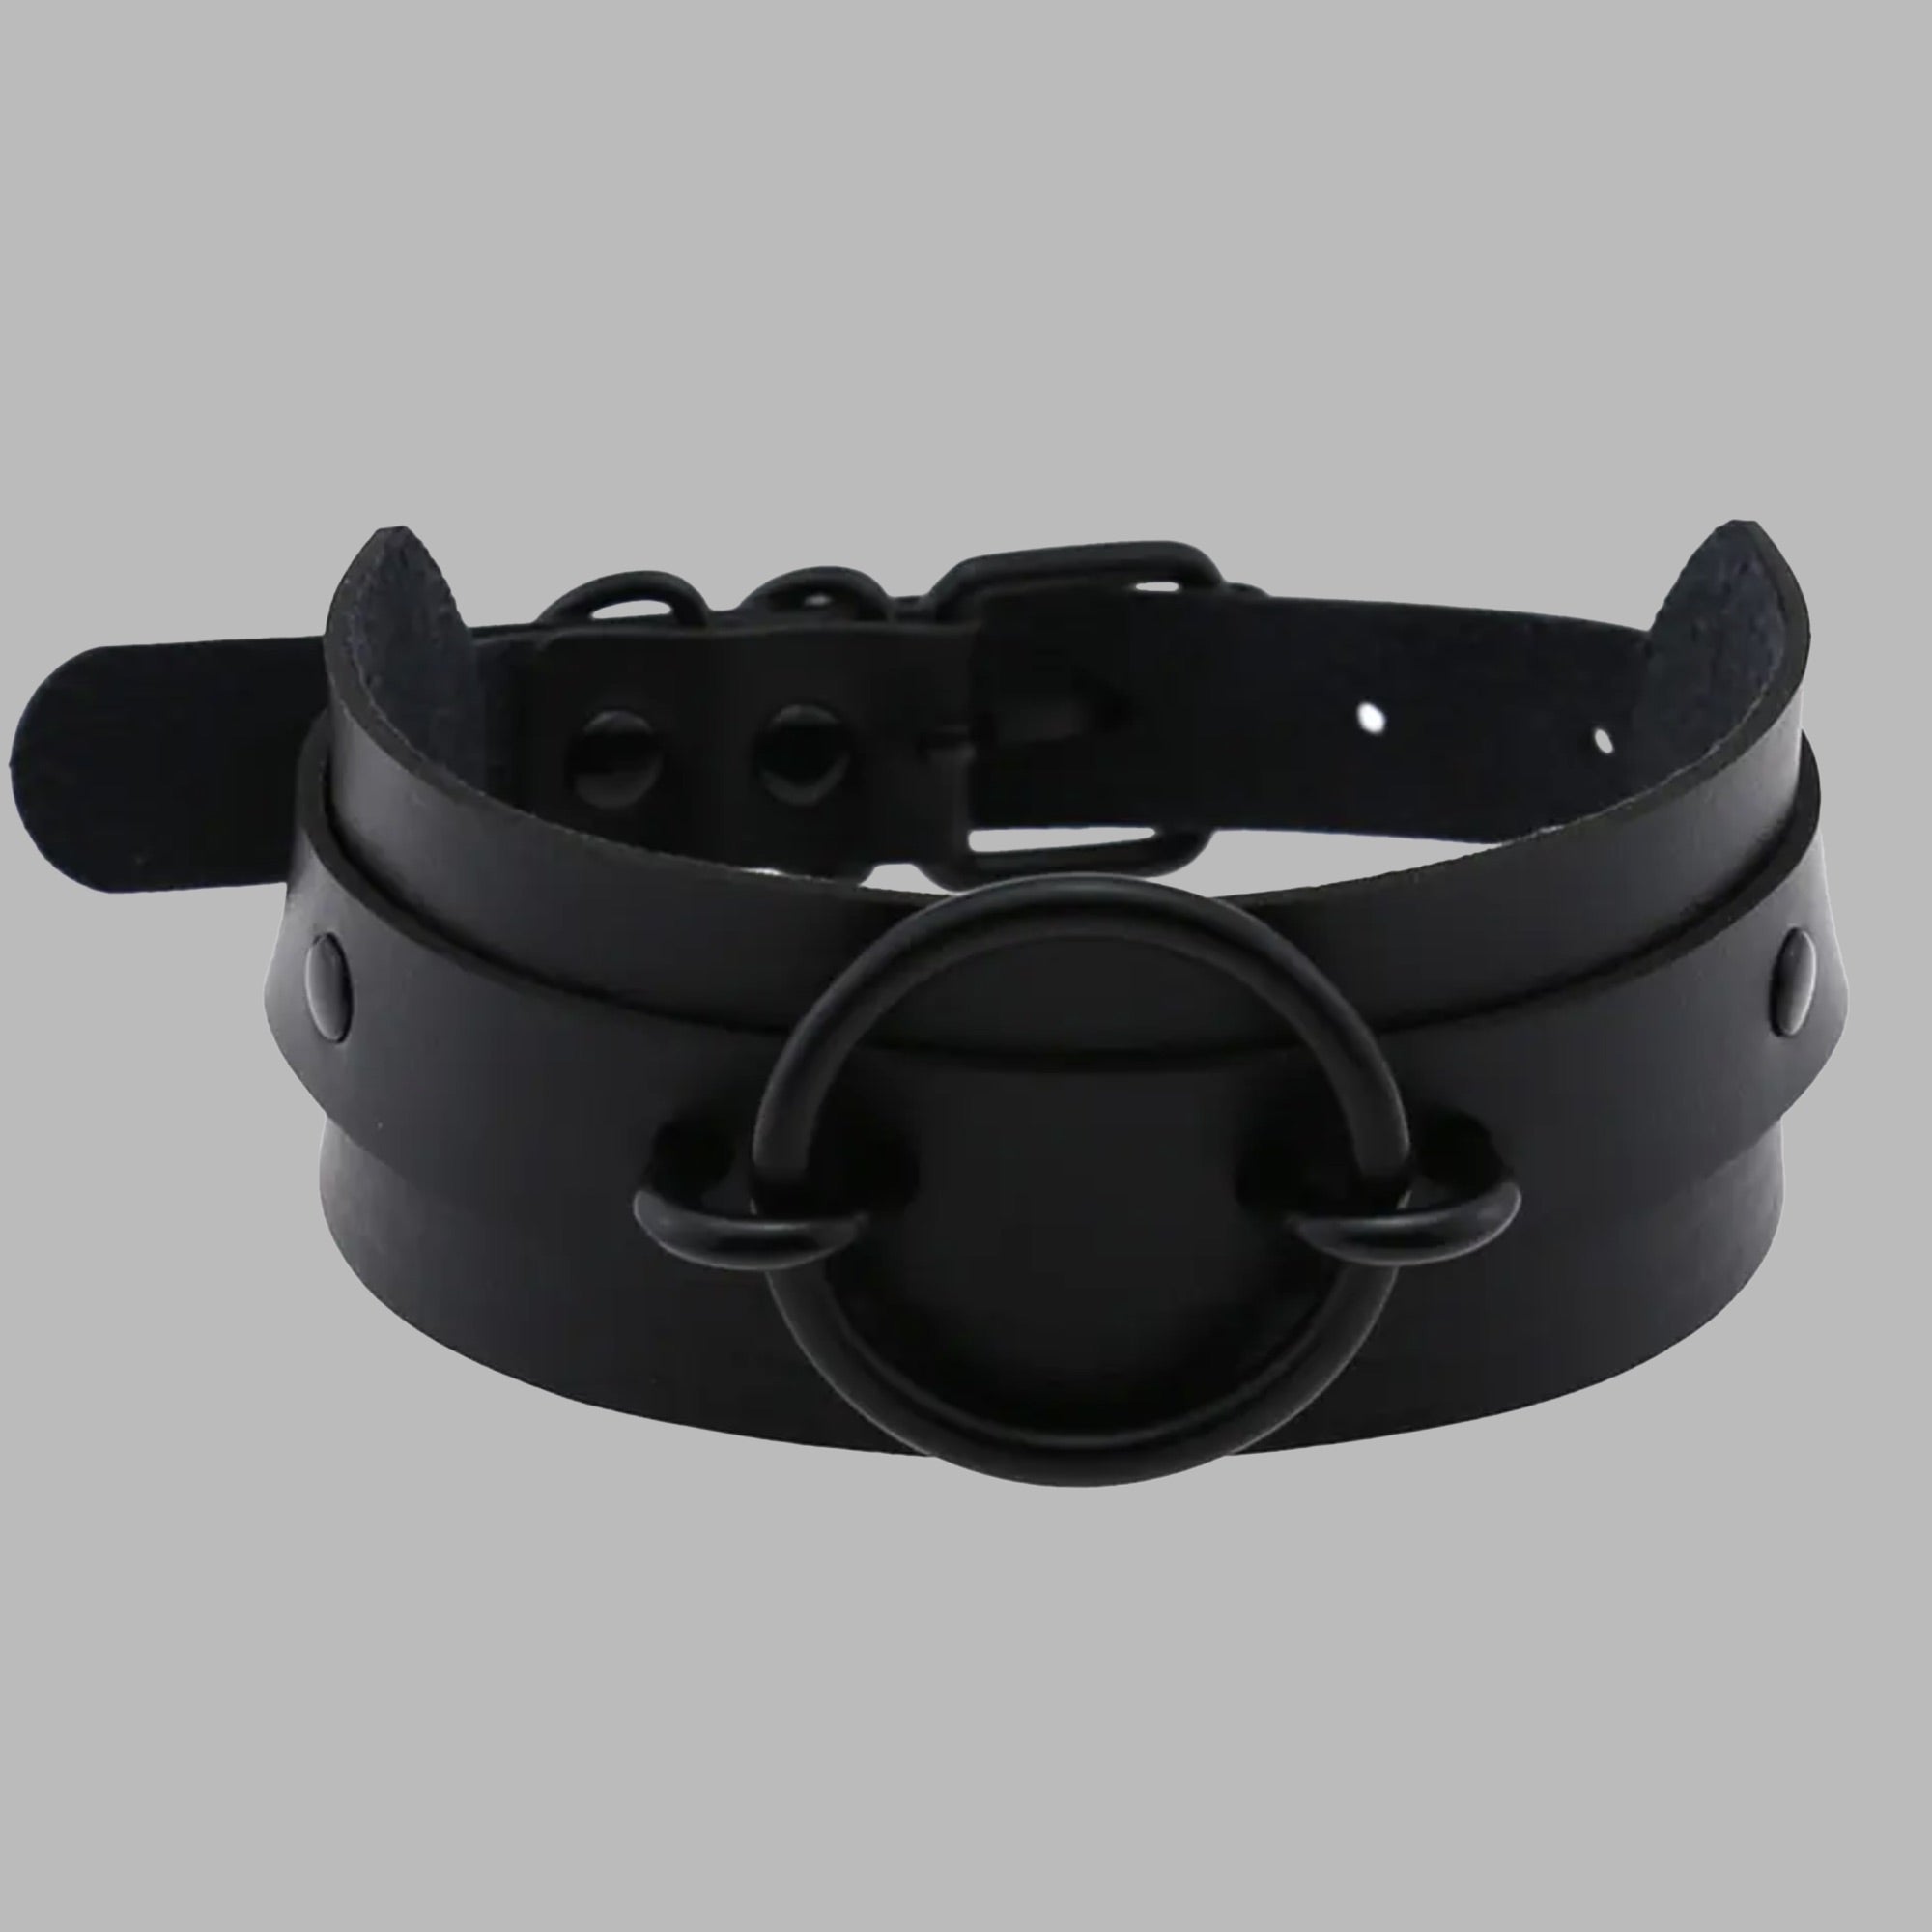 Fixed O Ring Choker Collar - Black & Black